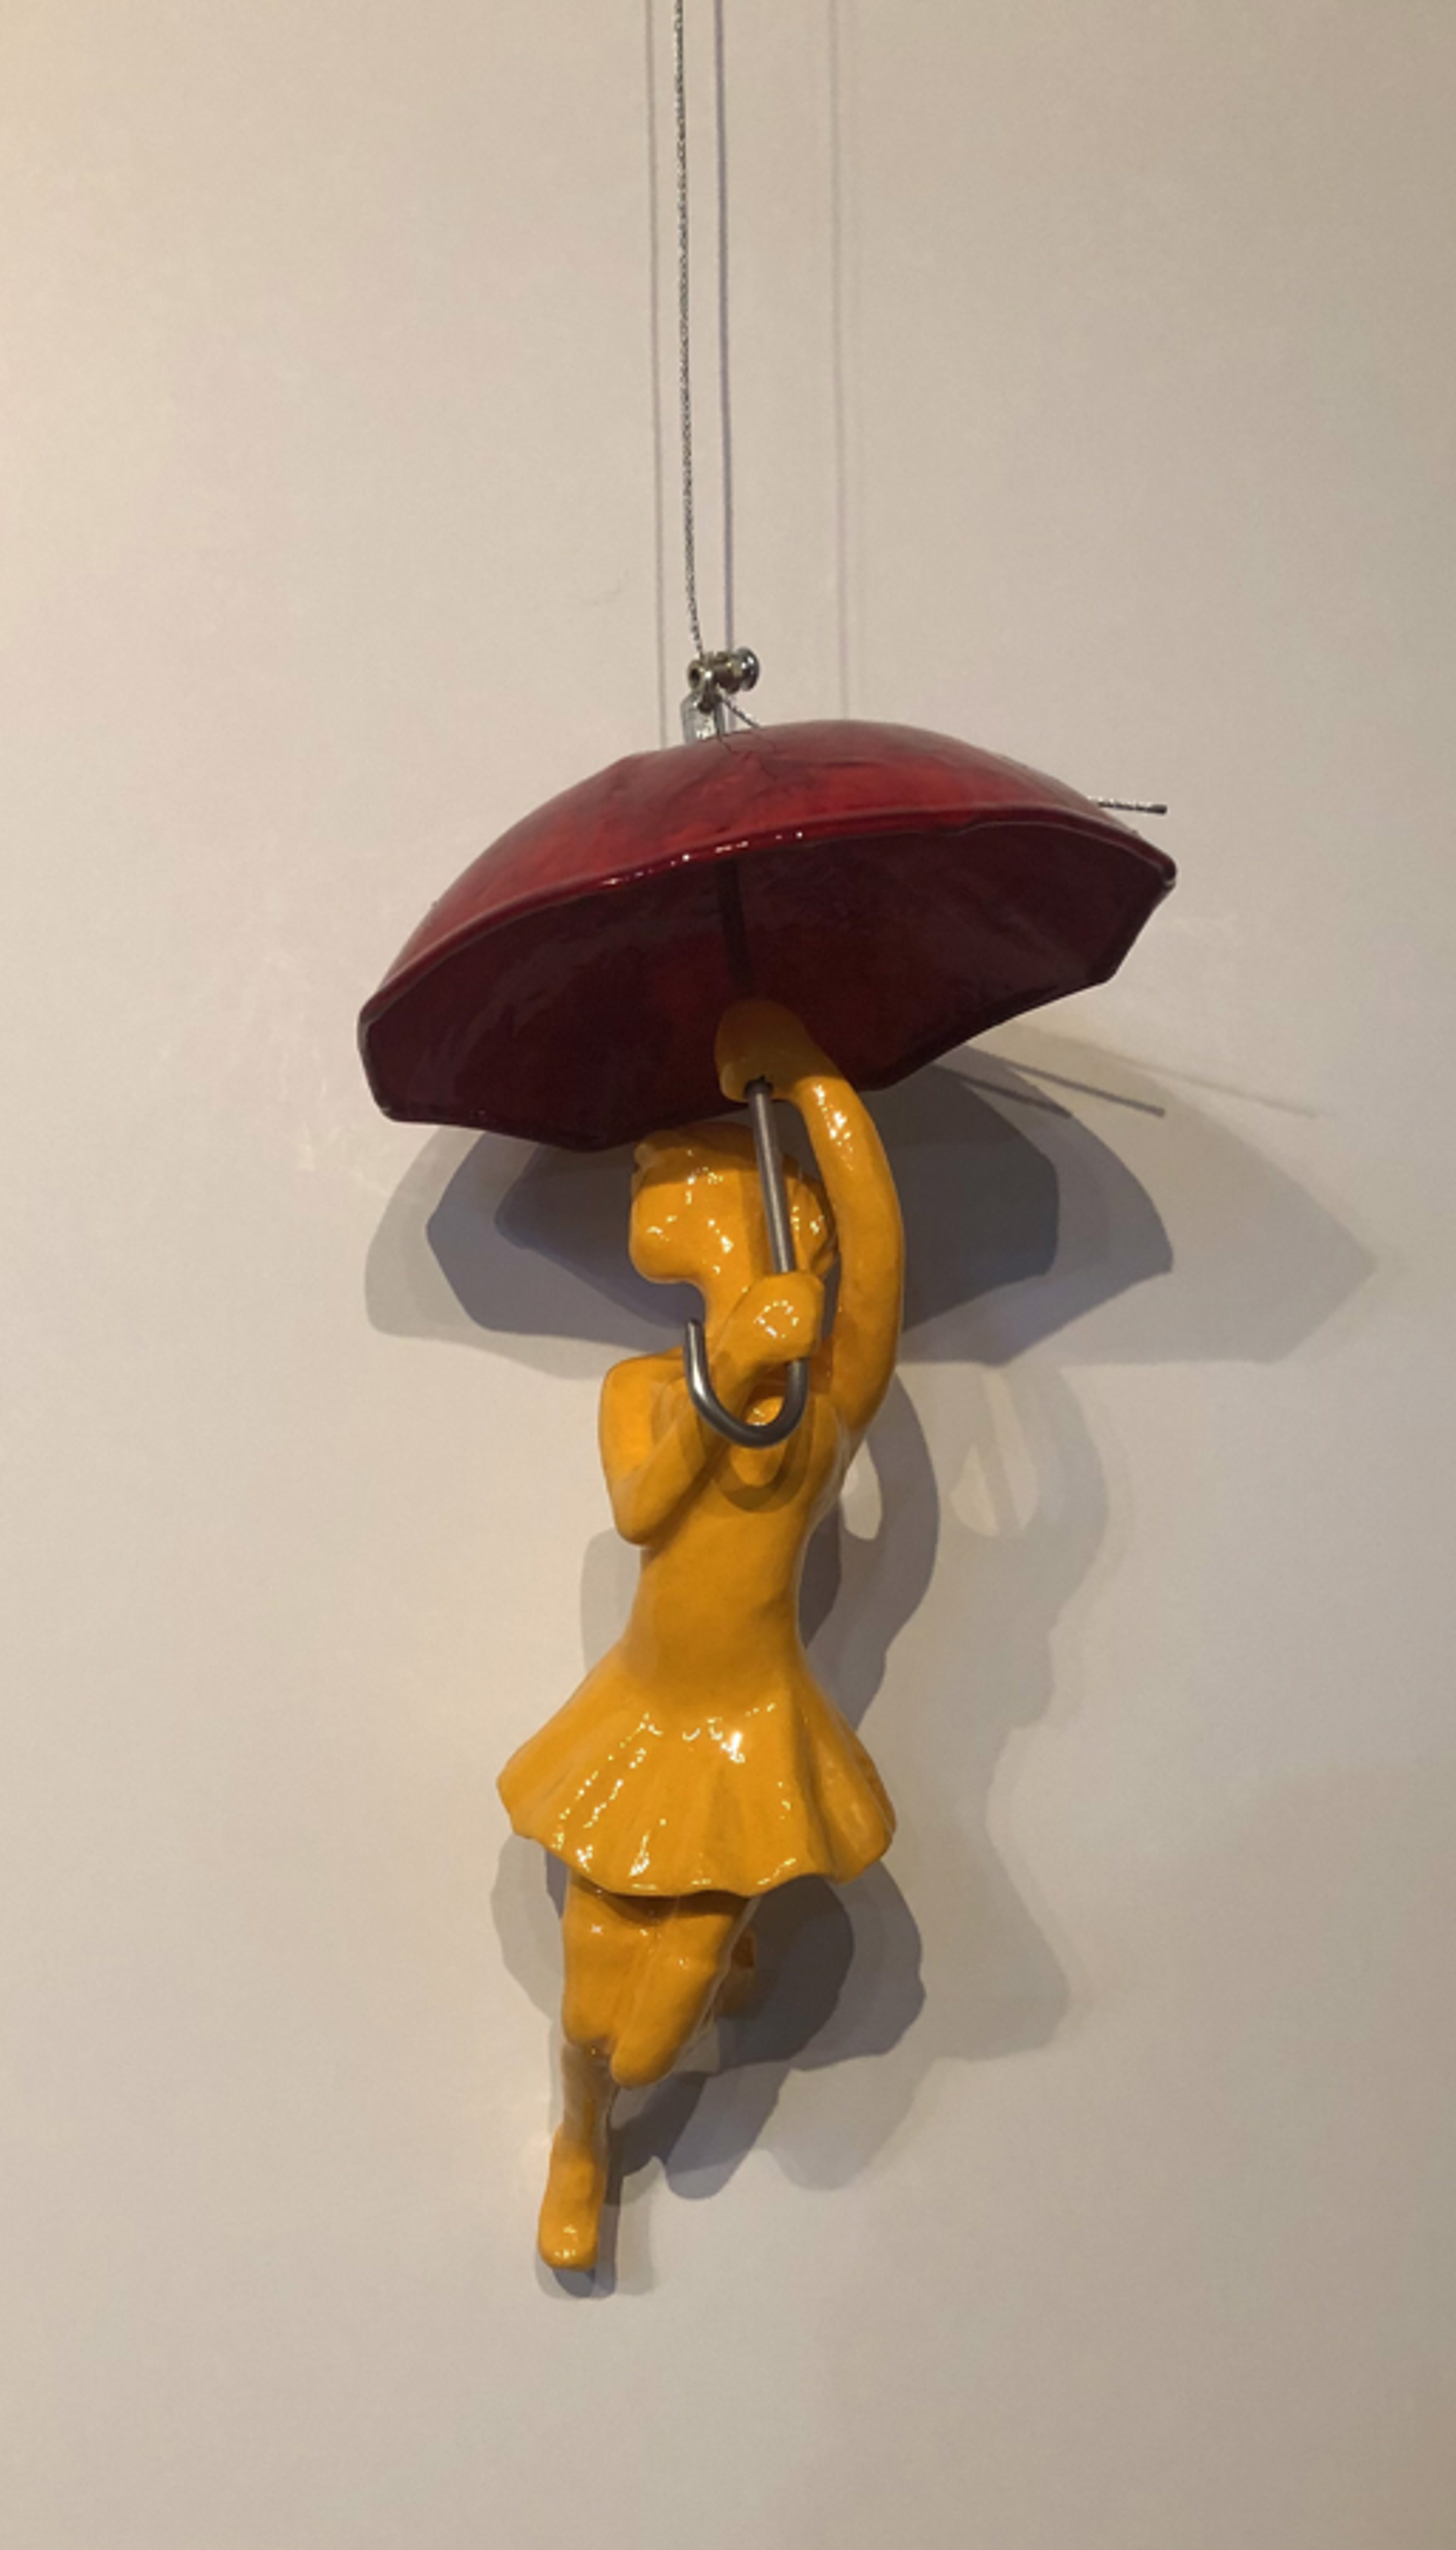 Ballerina with Umbrella (Red/Yellow) by Ancizar Marin